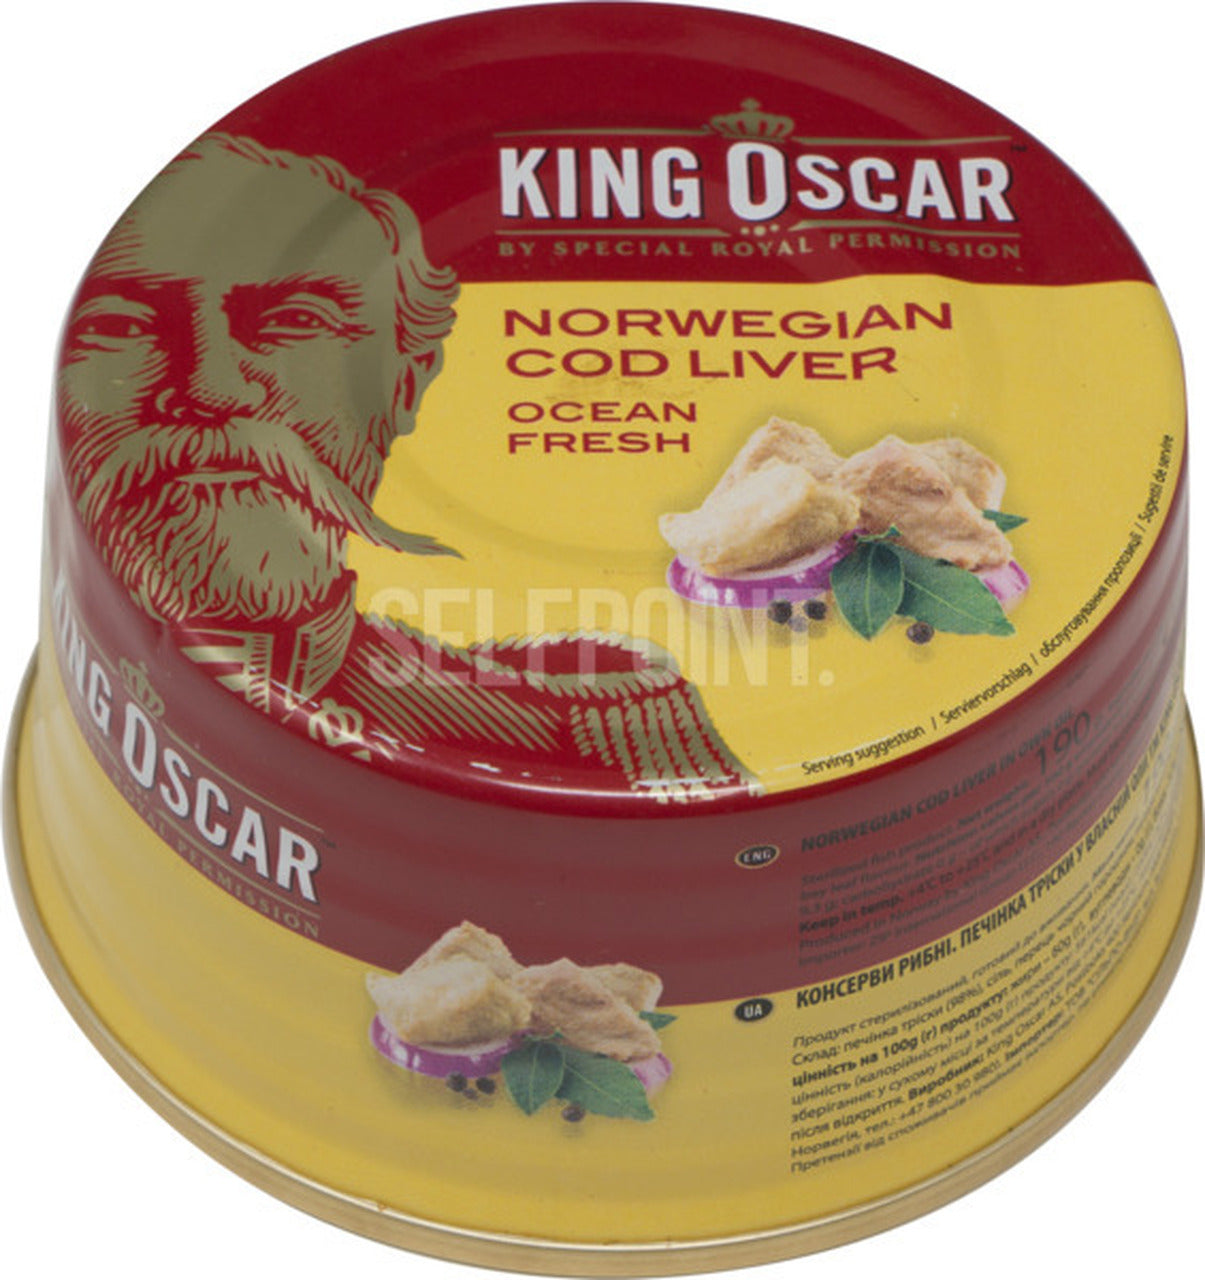 KING OSCAR NORWEGIAN COD LIVER 190g